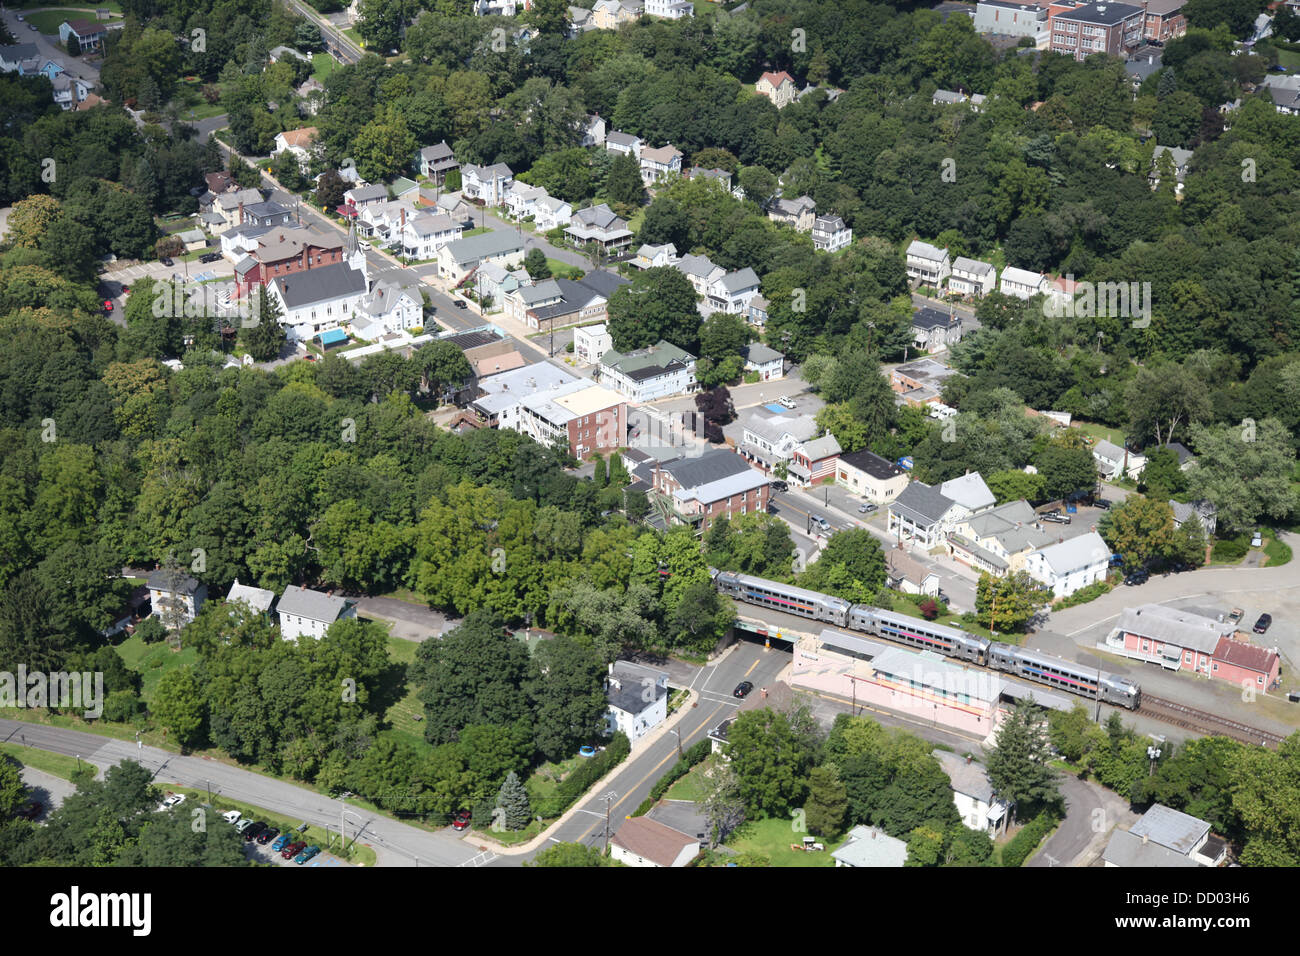 Aerial photograph of Borough of High Bridge, located in Hunterdon County, New Jersey, U.S.A. Stock Photo